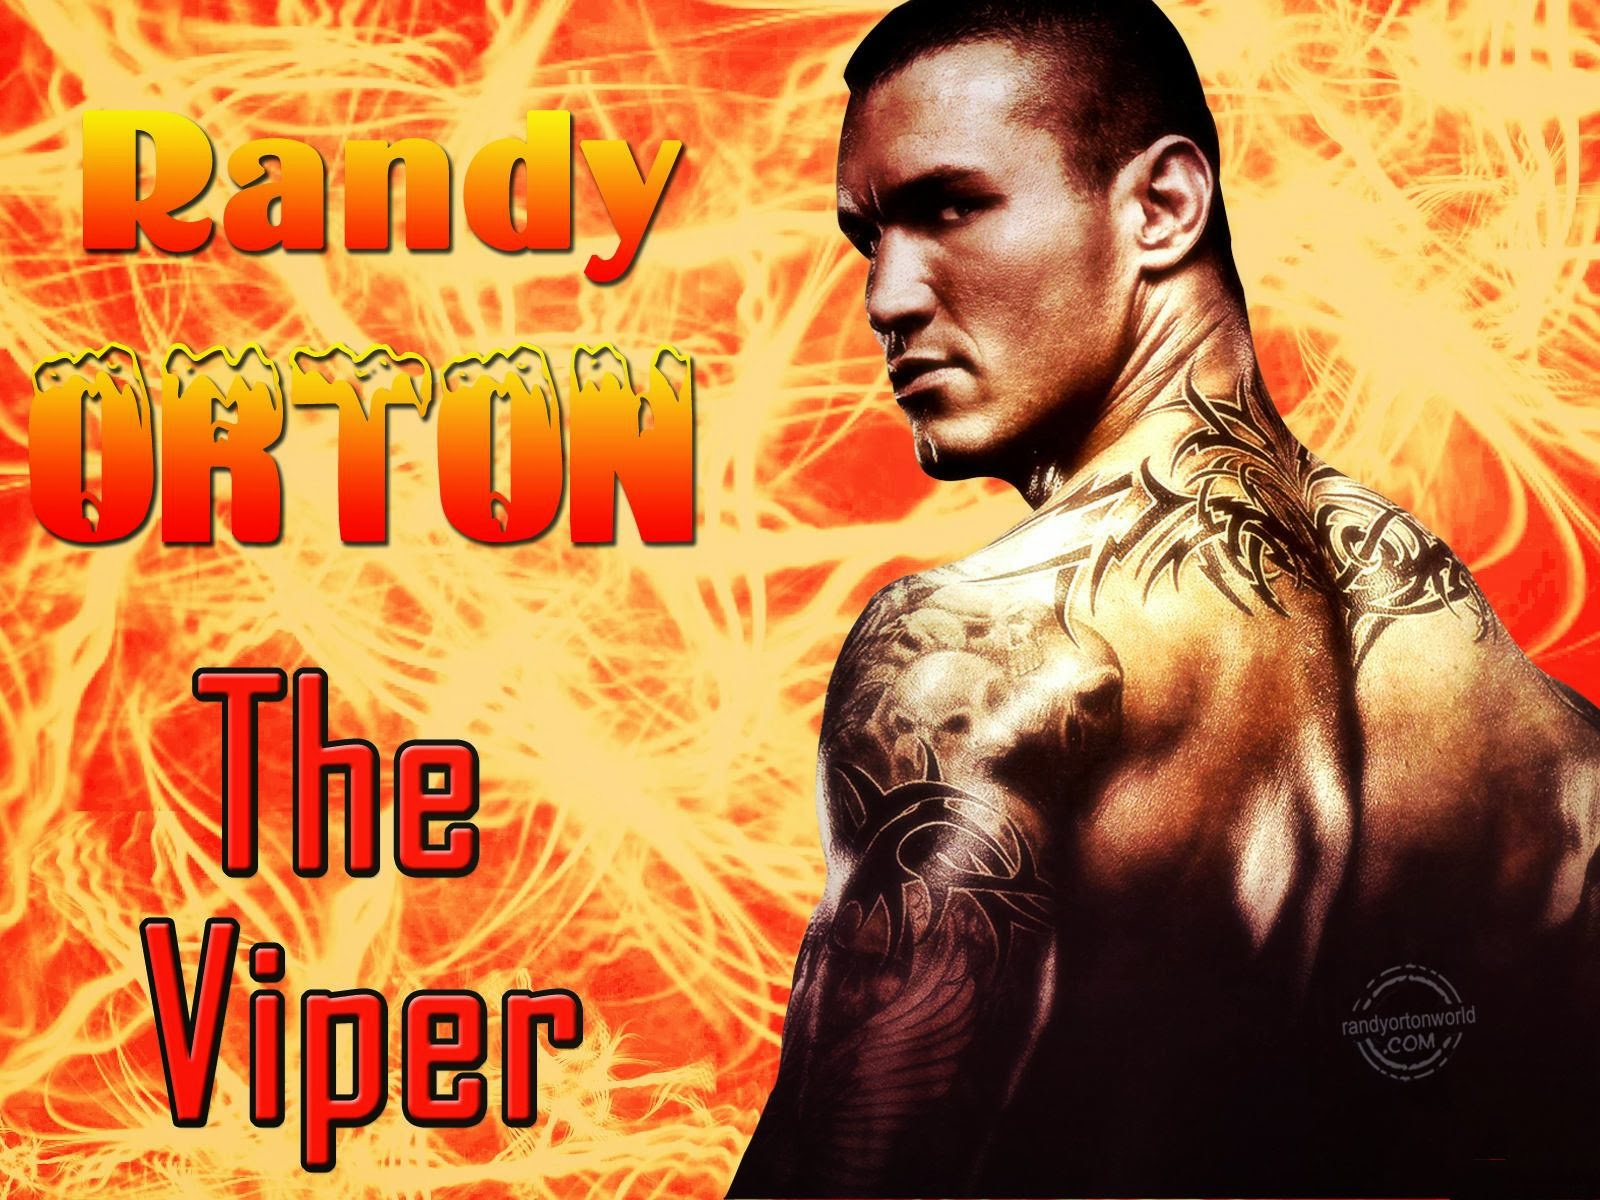 Randy Orton HD Wallpaper Brrip